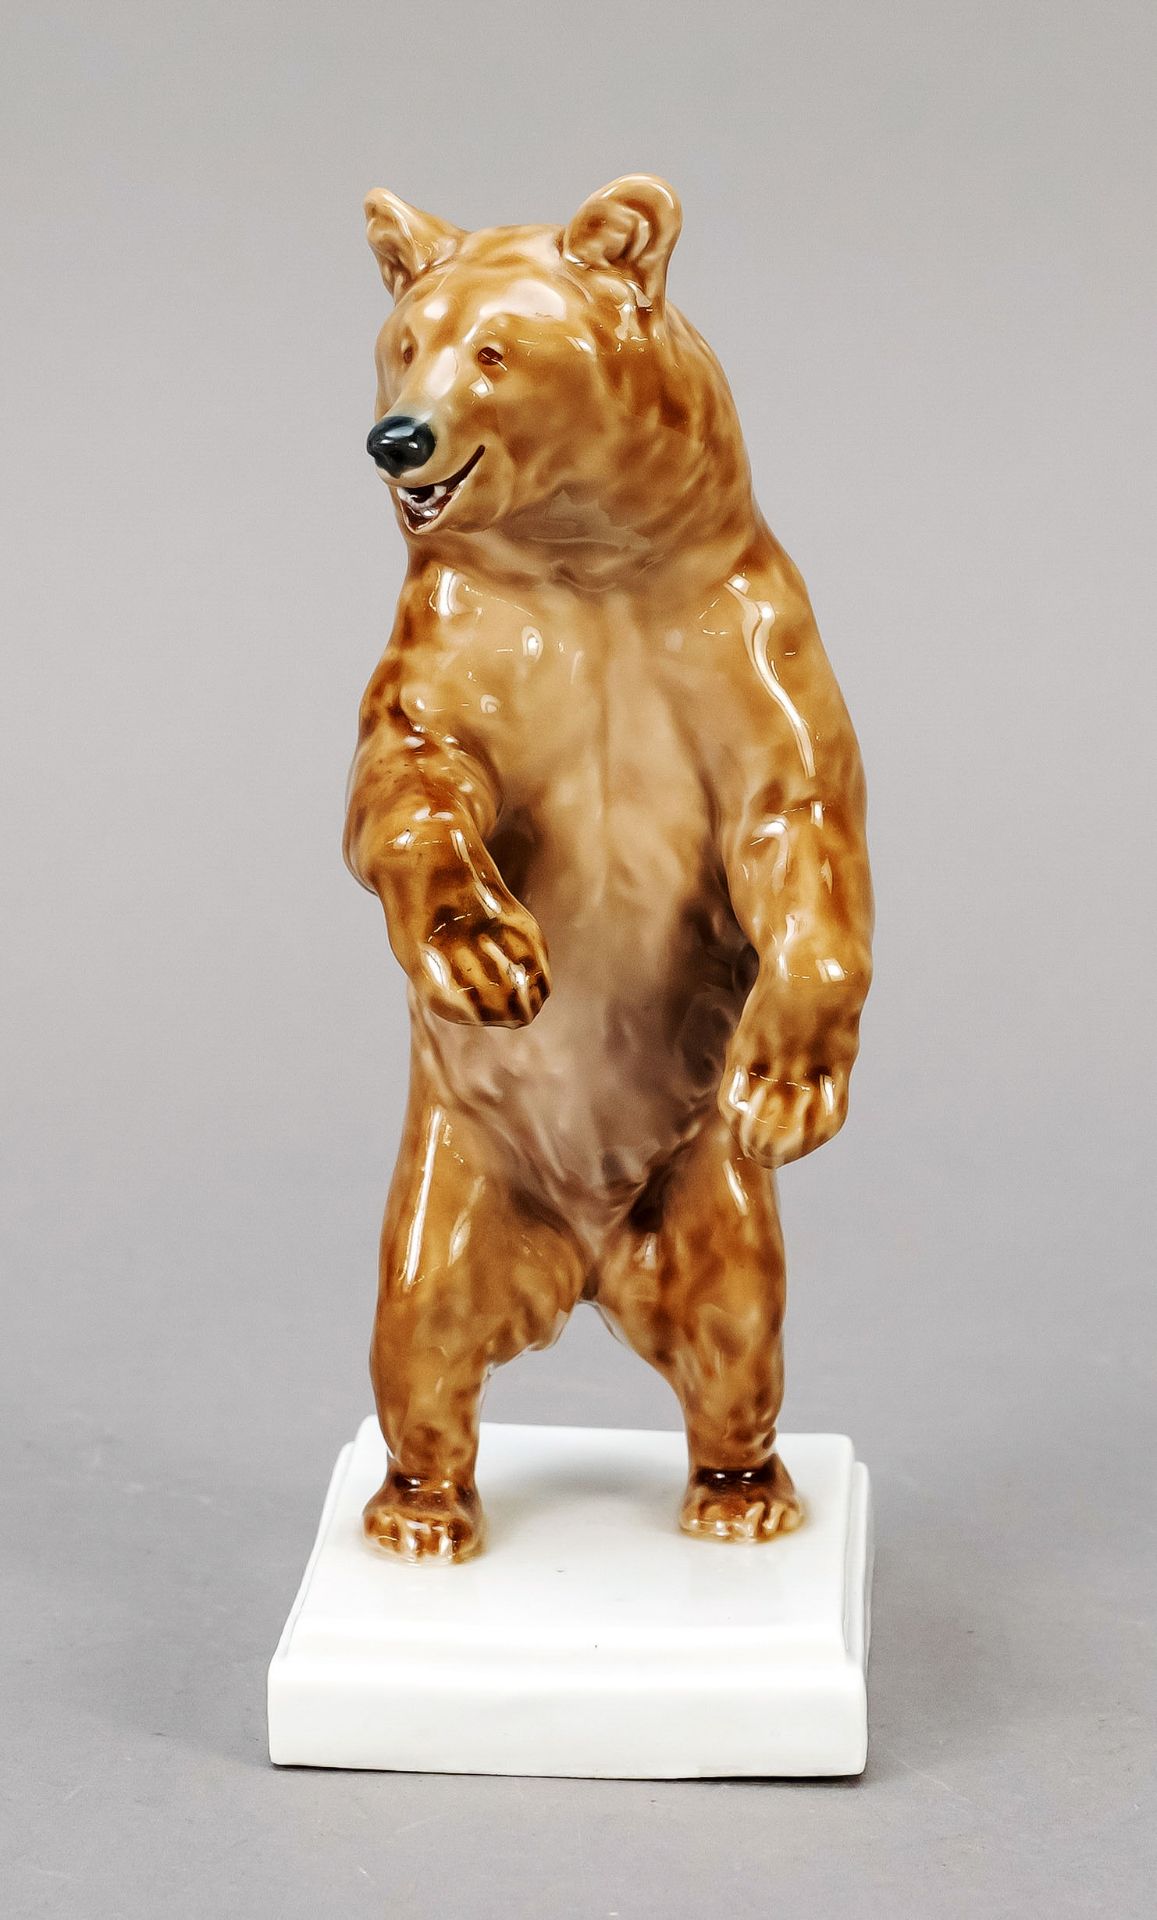 Upright standing bear, Meissen, Knauffzeit 1850-1924, 1st choice, designed by Erich Hösel in 1908,